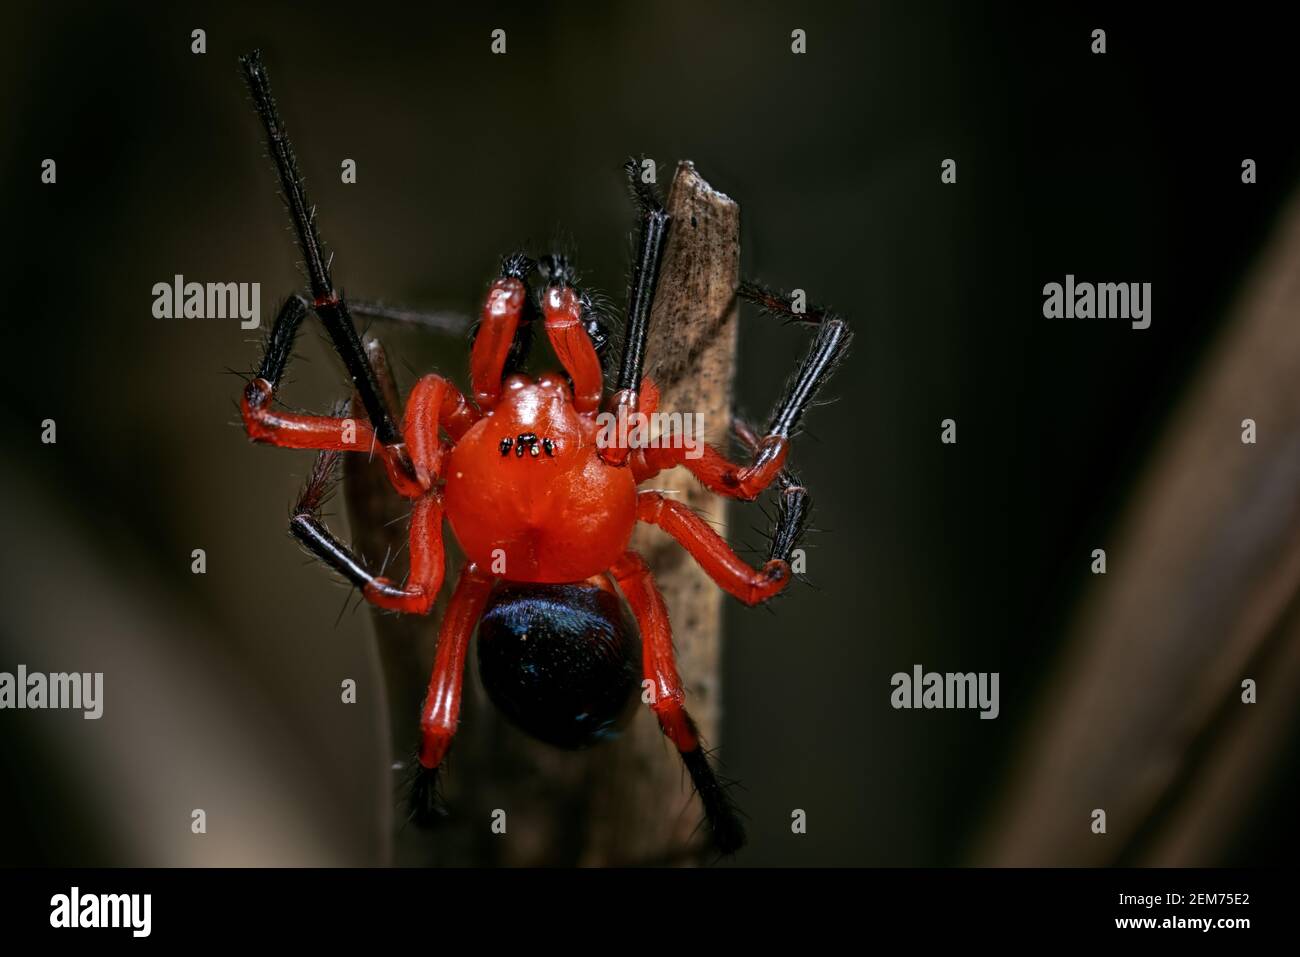 Red and Black spider, Nicodamidae, close up Stock Photo